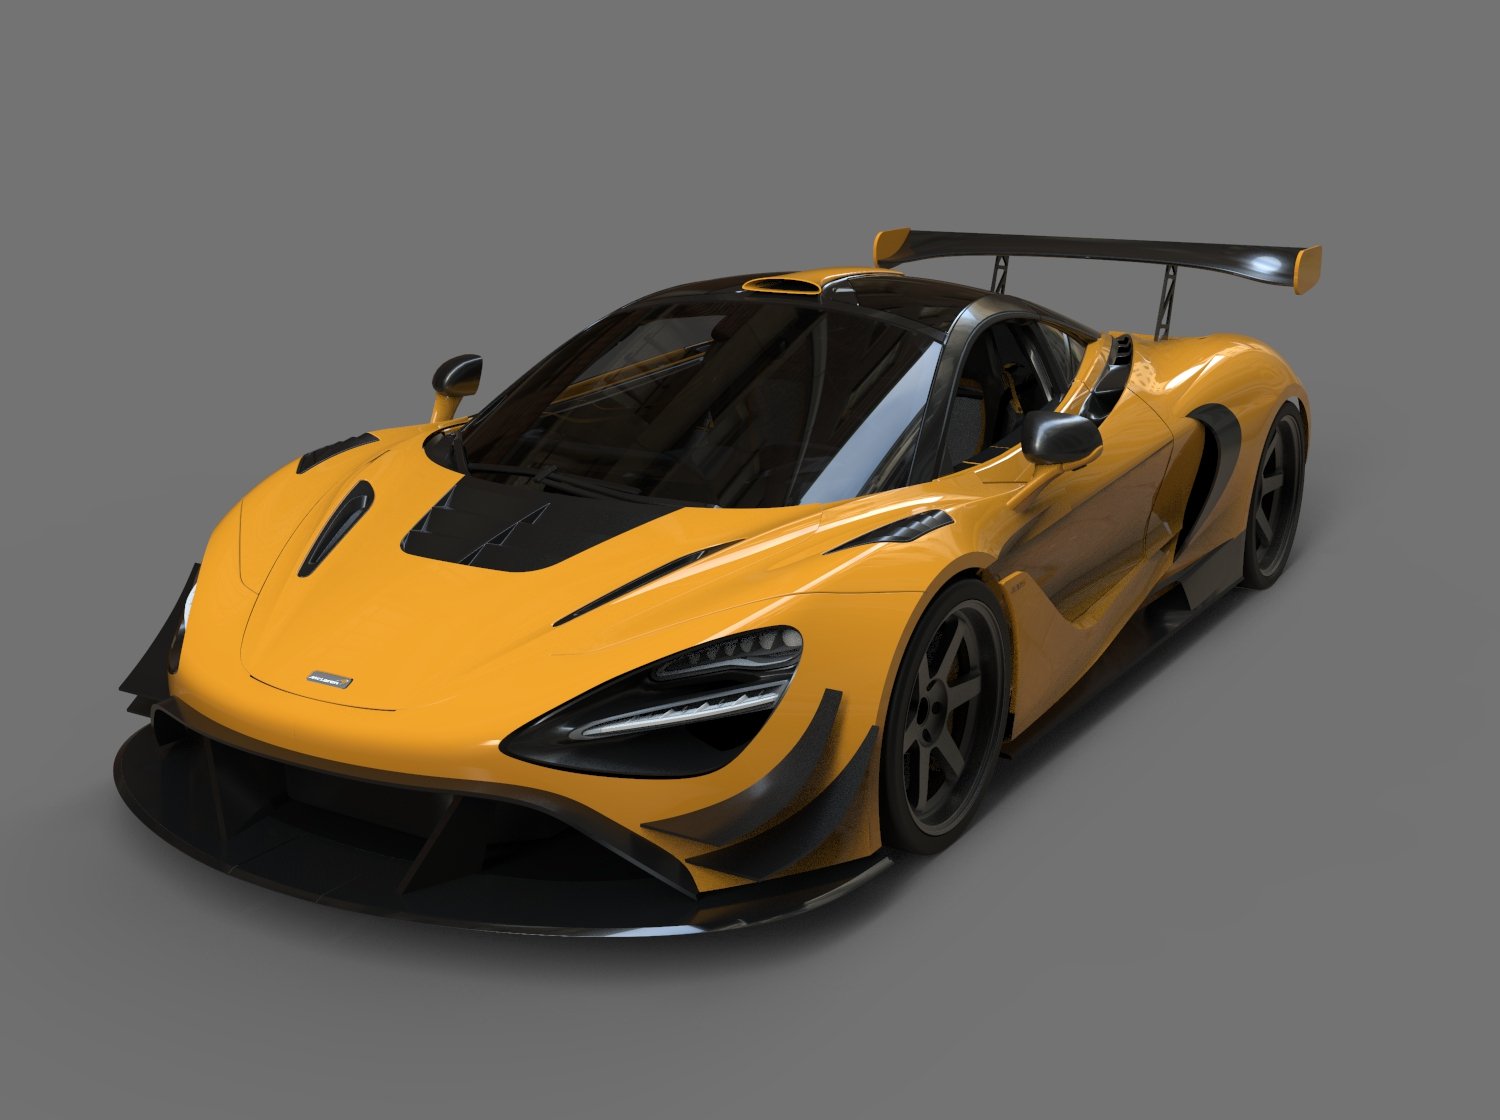 Check price and buy Duke Dynamics Body kit set for McLaren 720s GT3